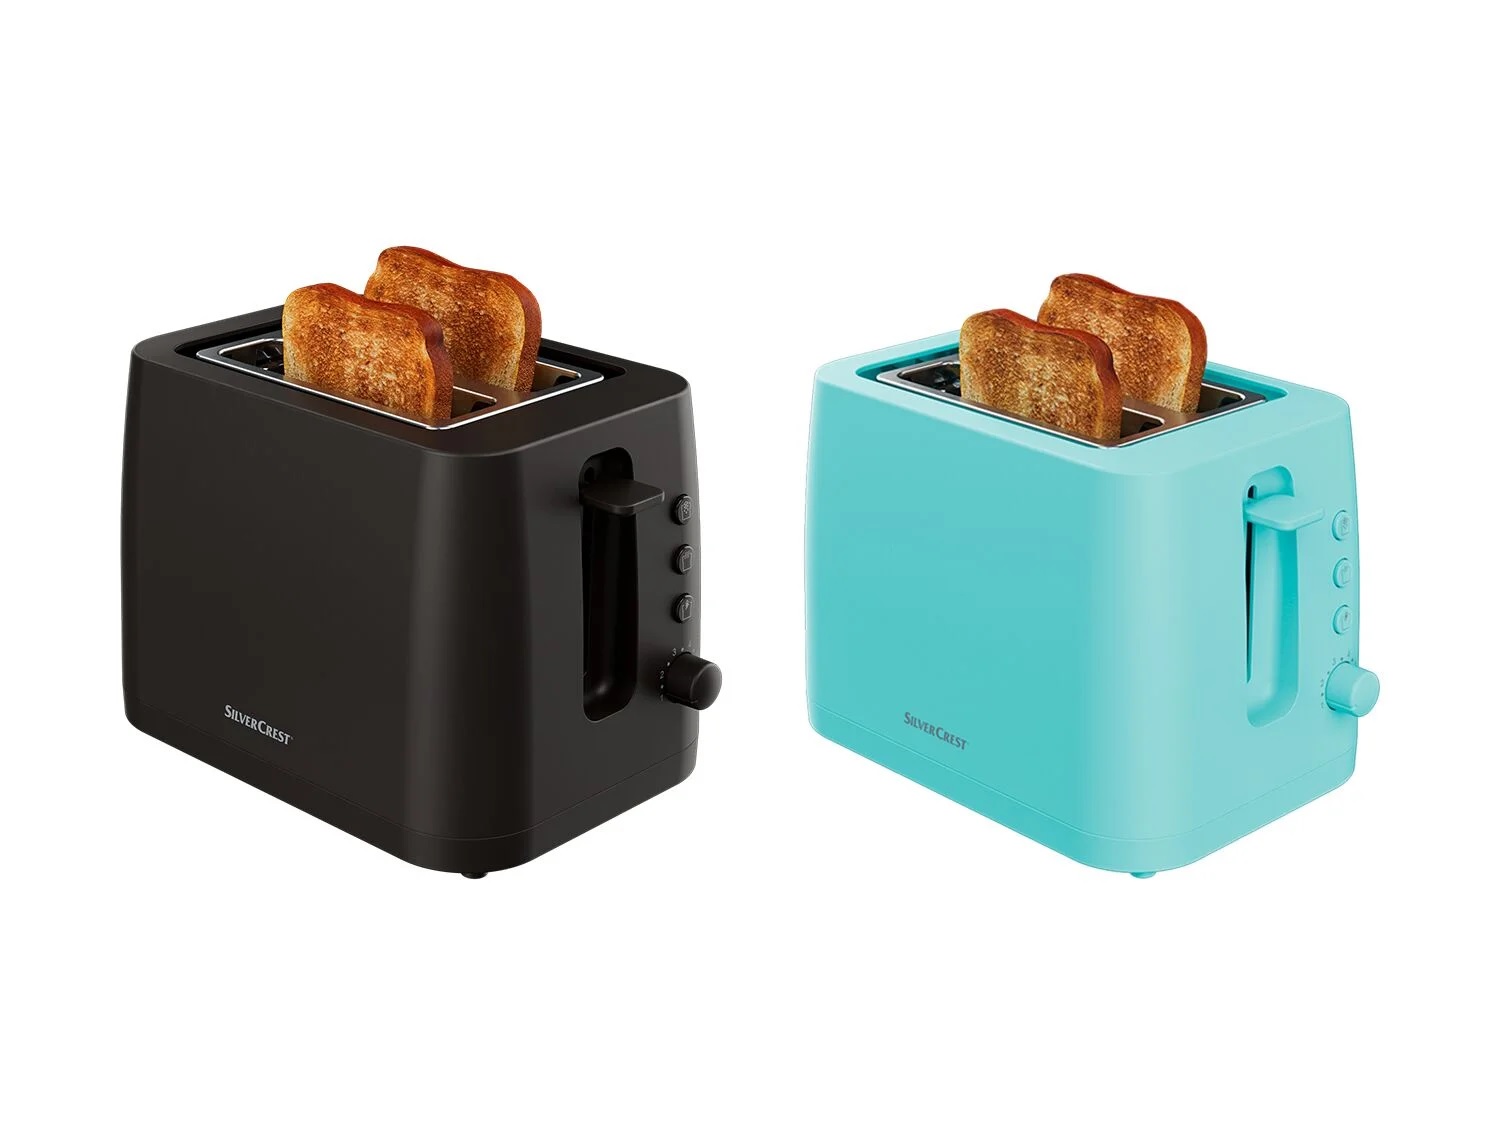 870 W toaster